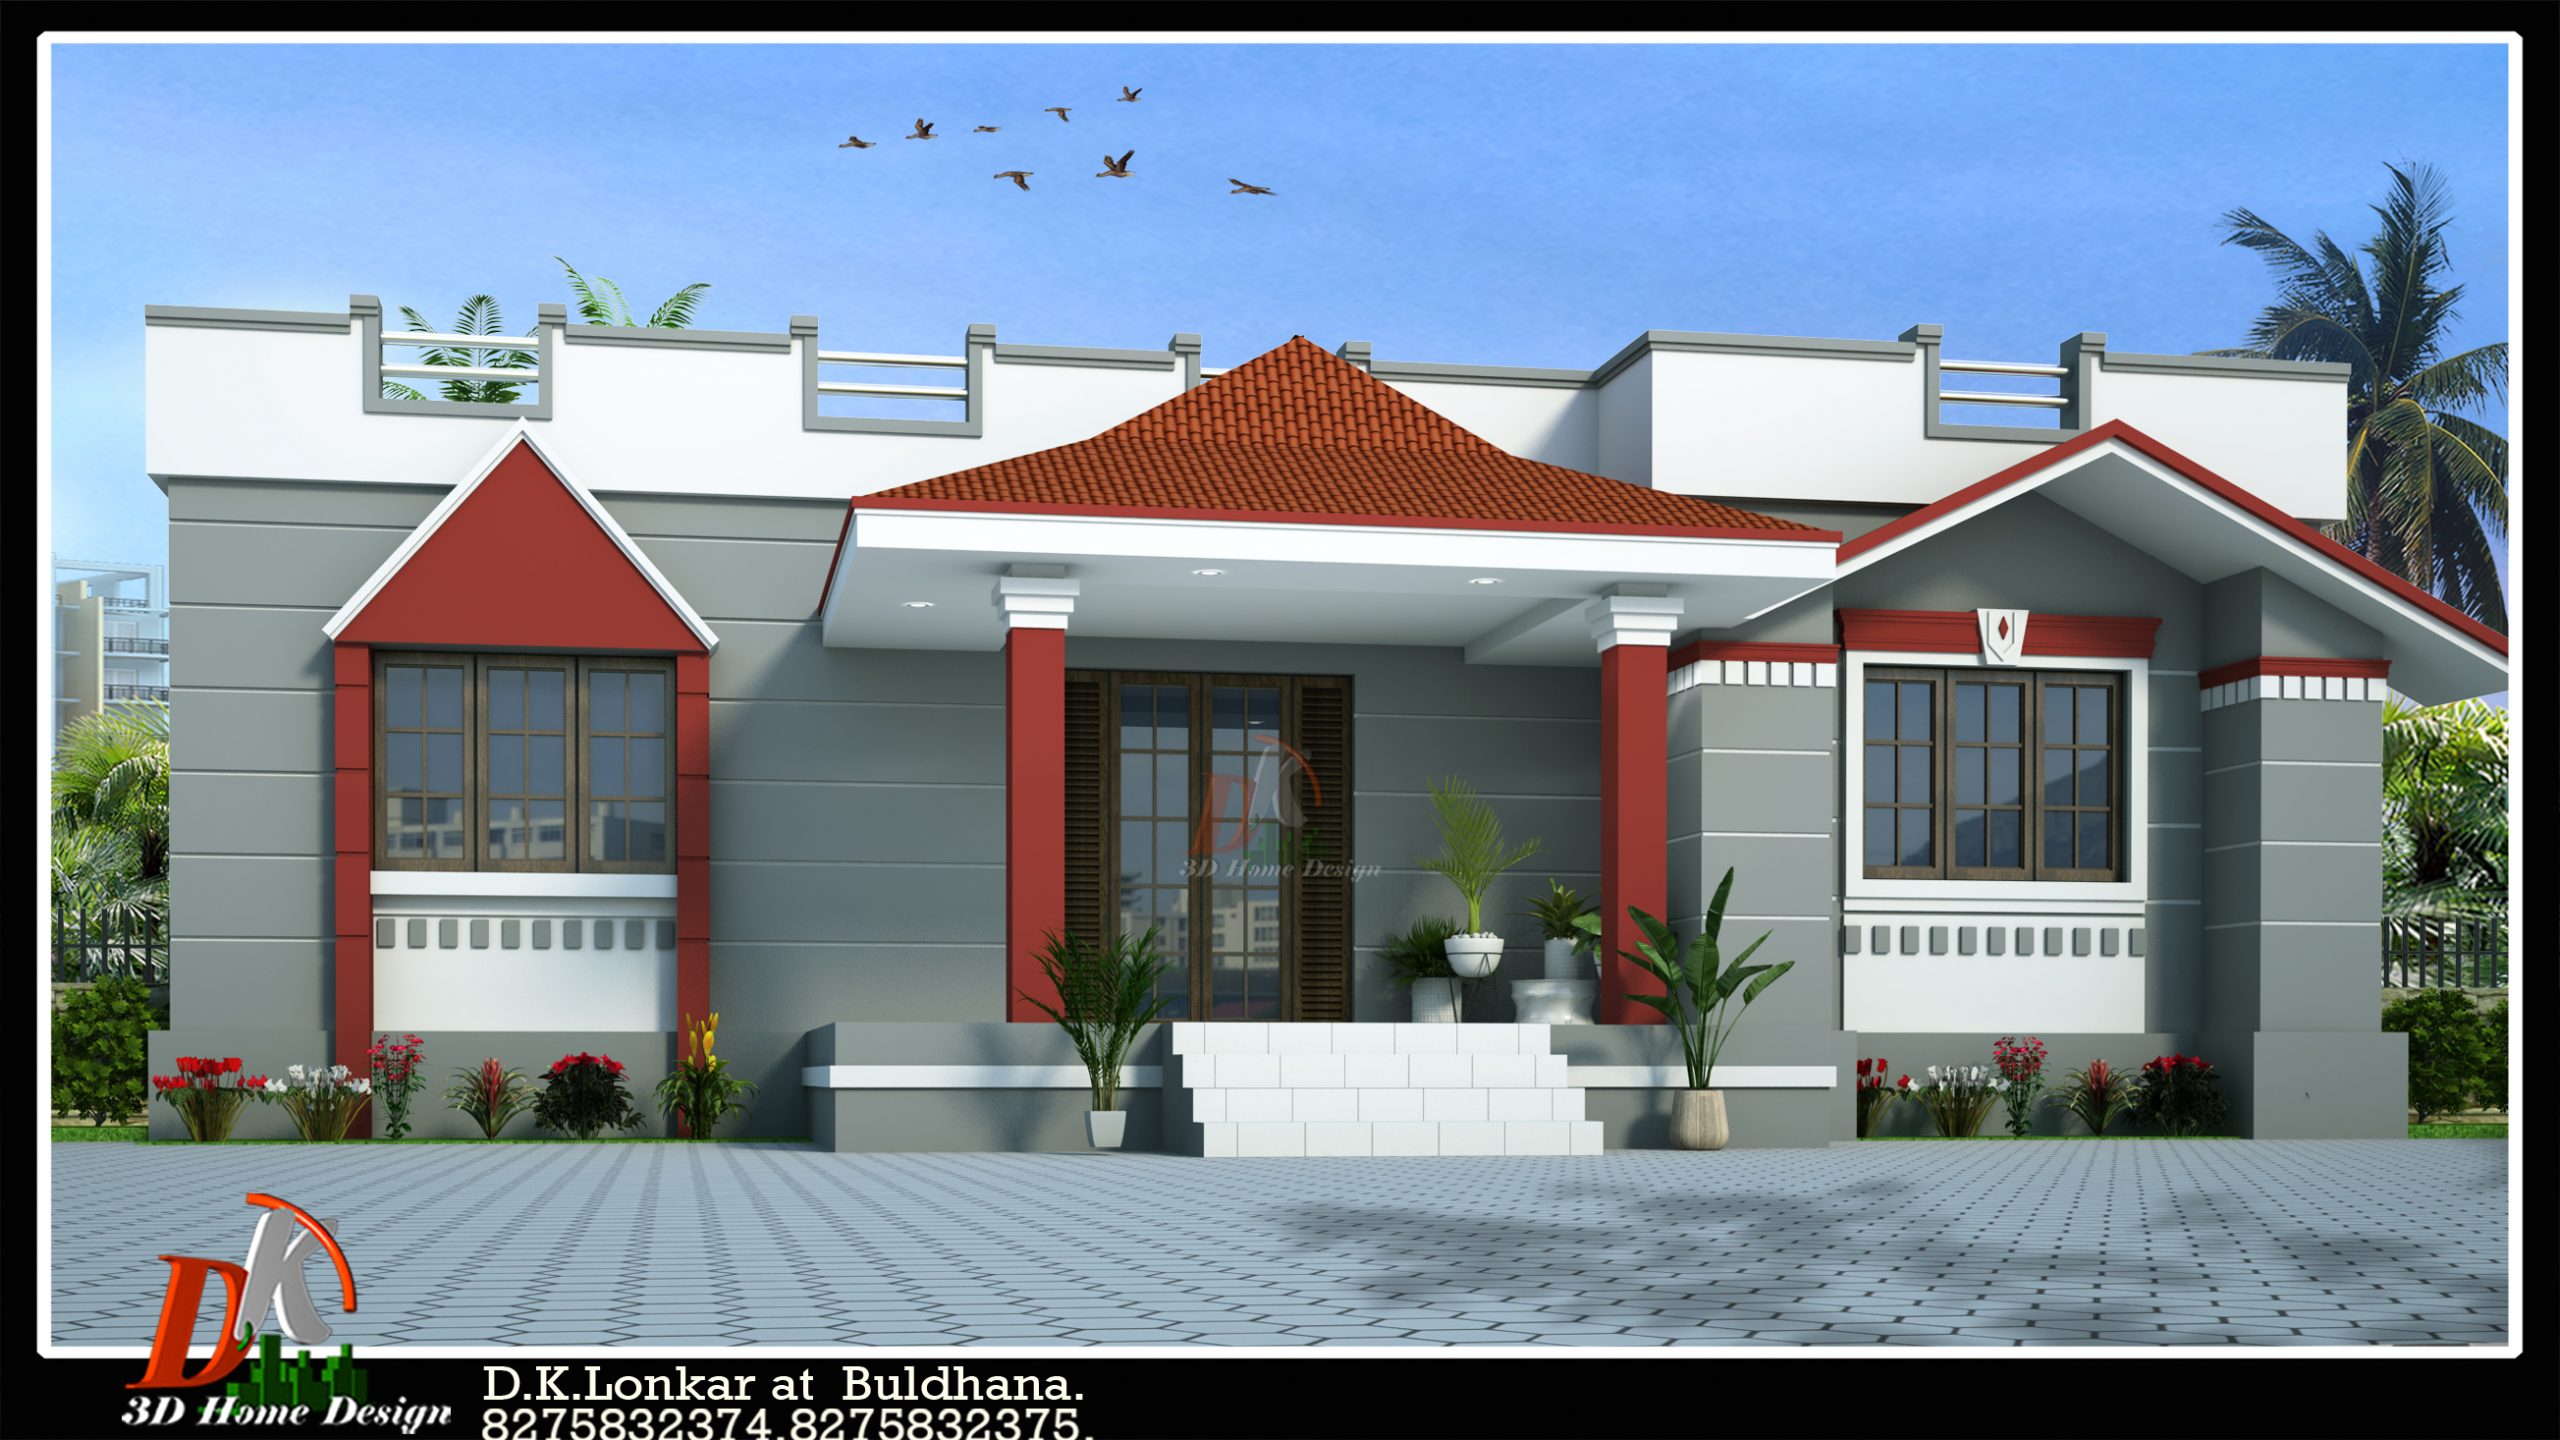 exterior house colors